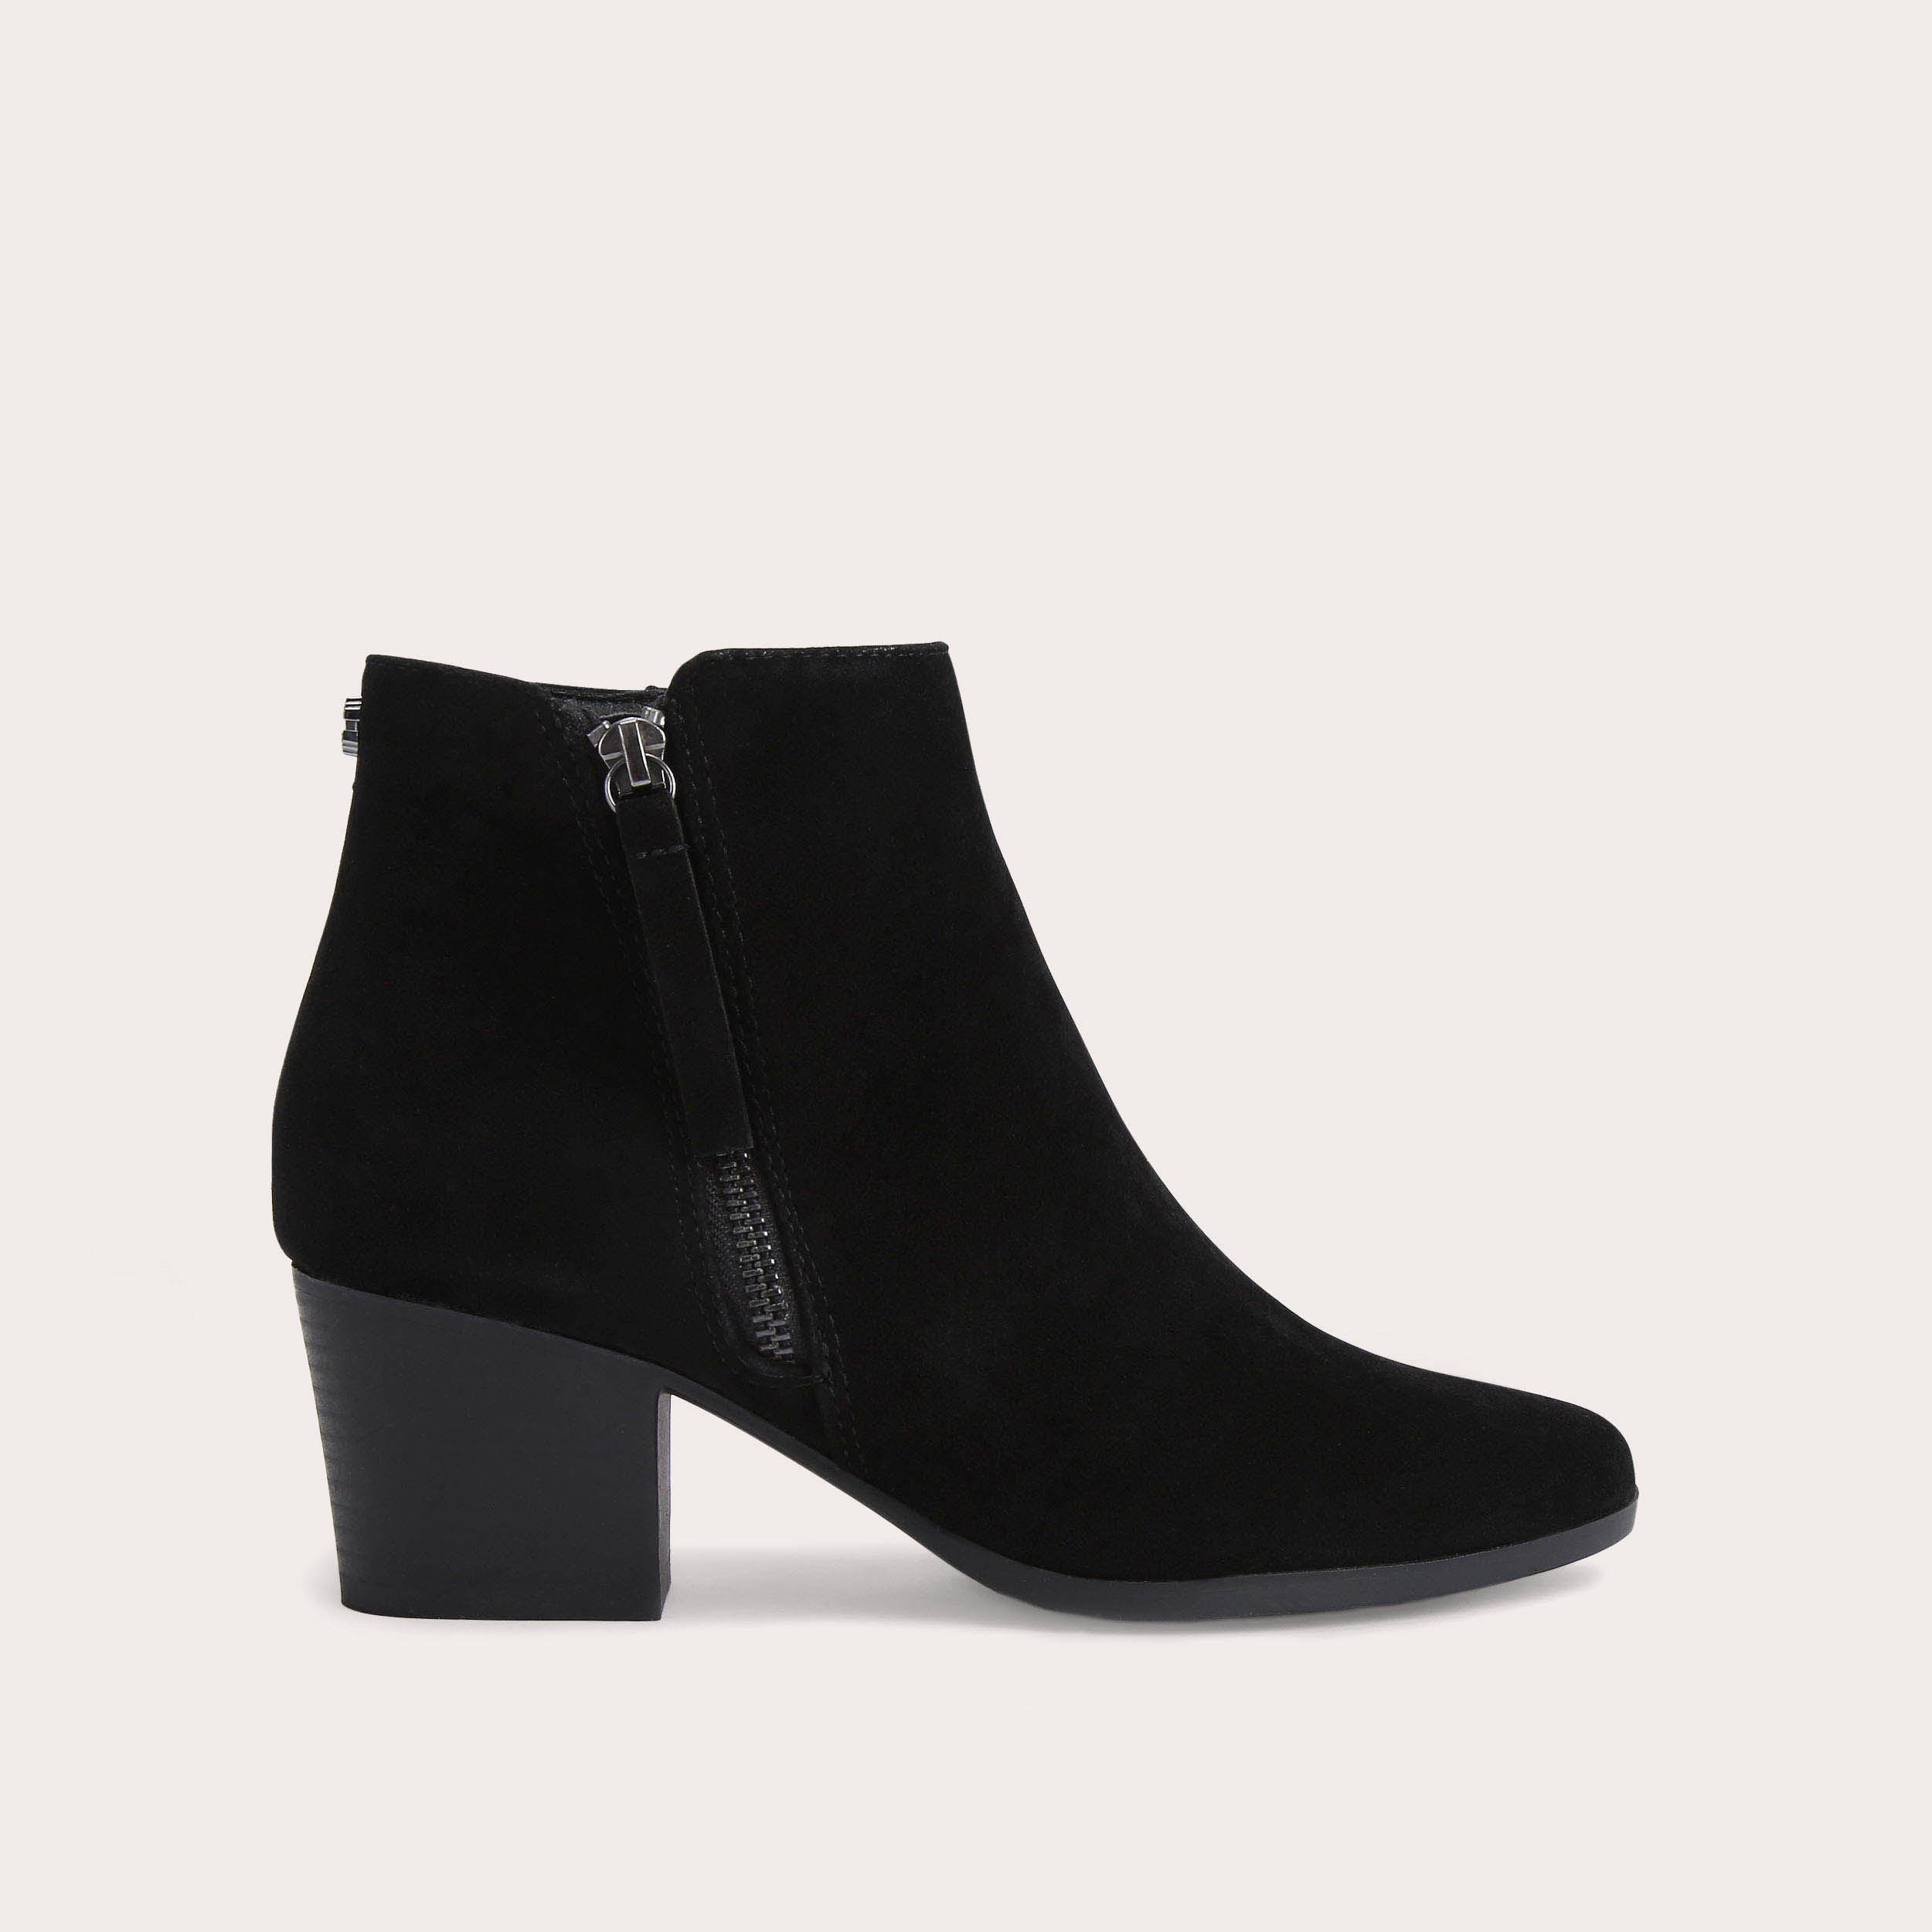 TESSA Black Block Heel Ankle Boots by CARVELA COMFORT